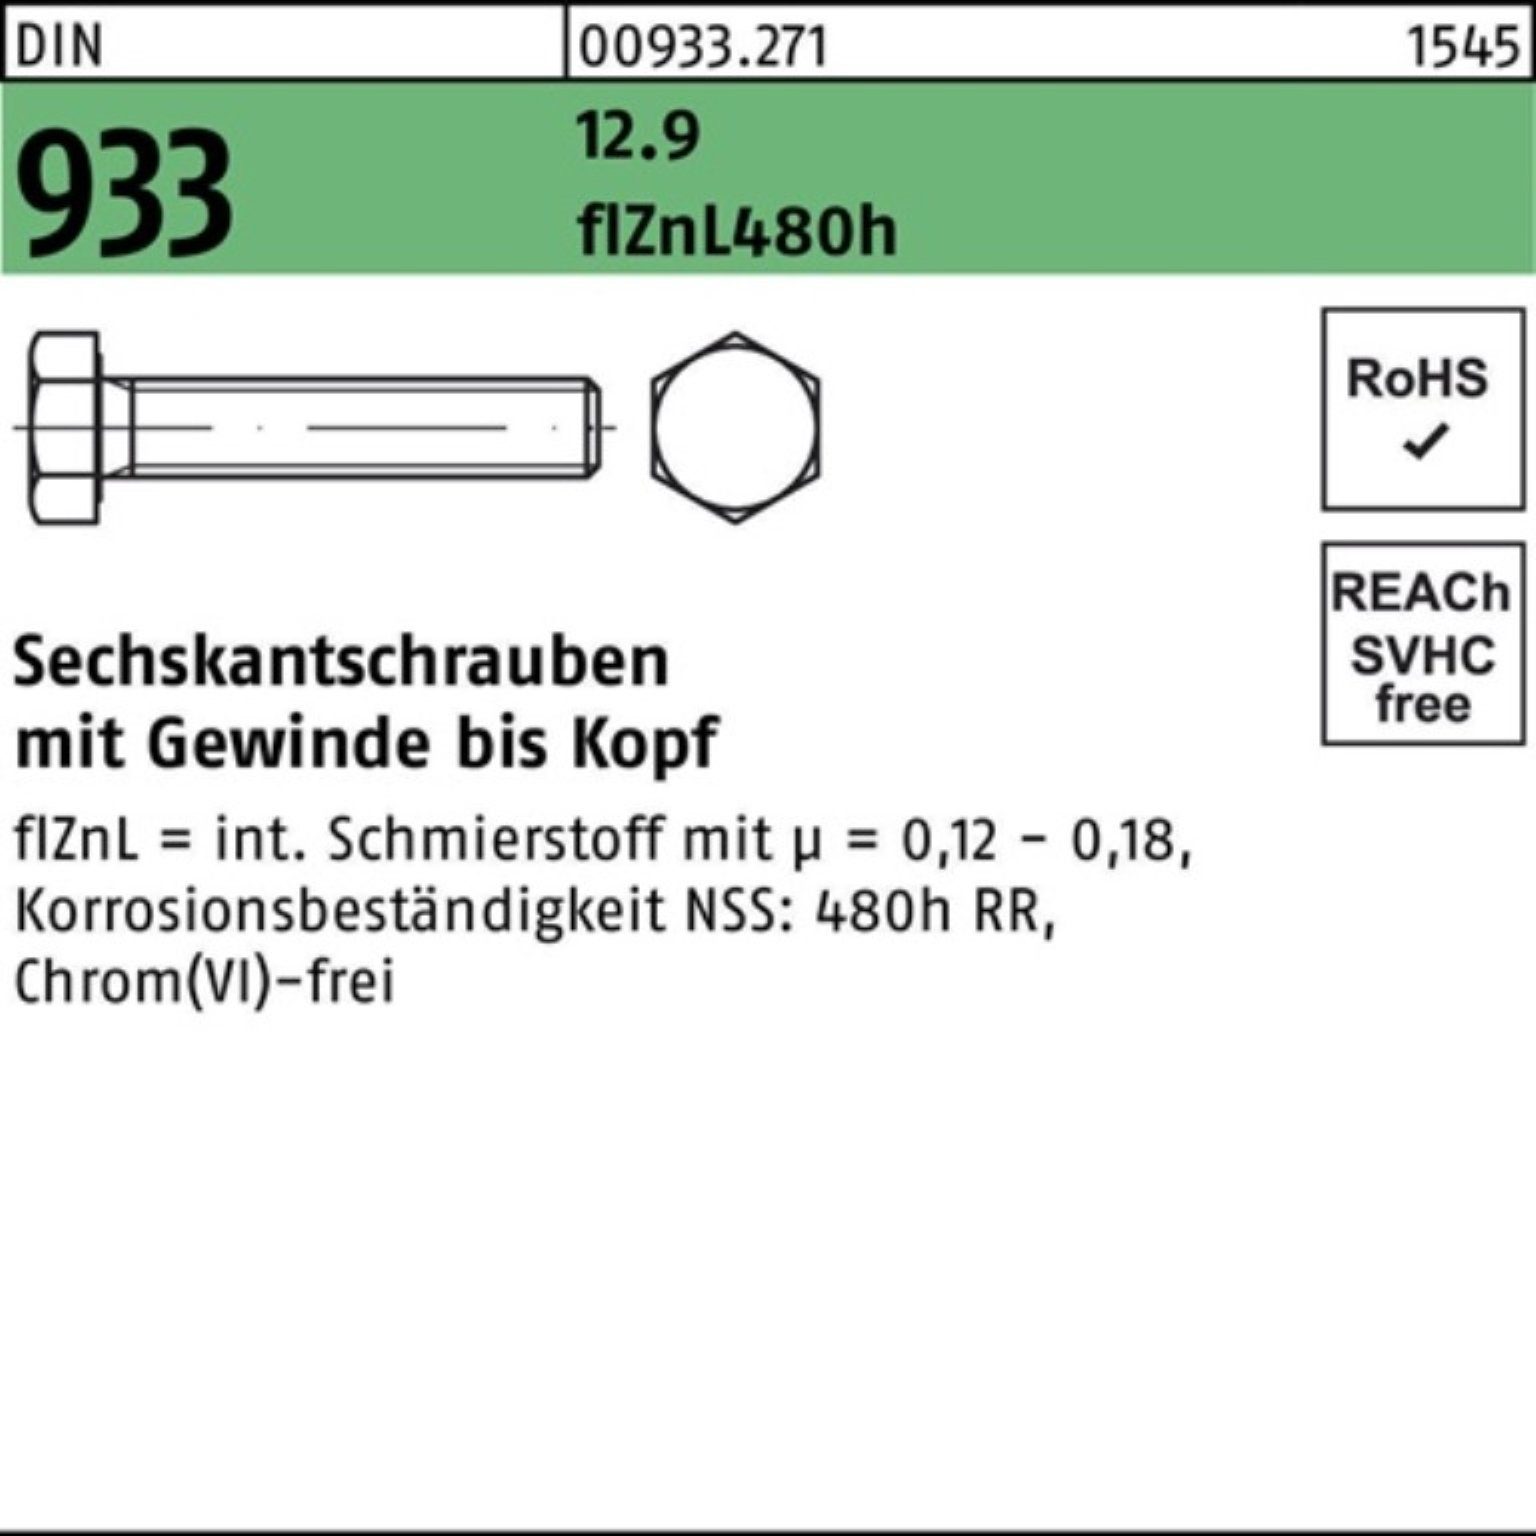 Reyher Sechskantschraube 100er Pack Sechskantschraube DIN 933 VG M16x 40 12.9 flZnL 480h zinkla